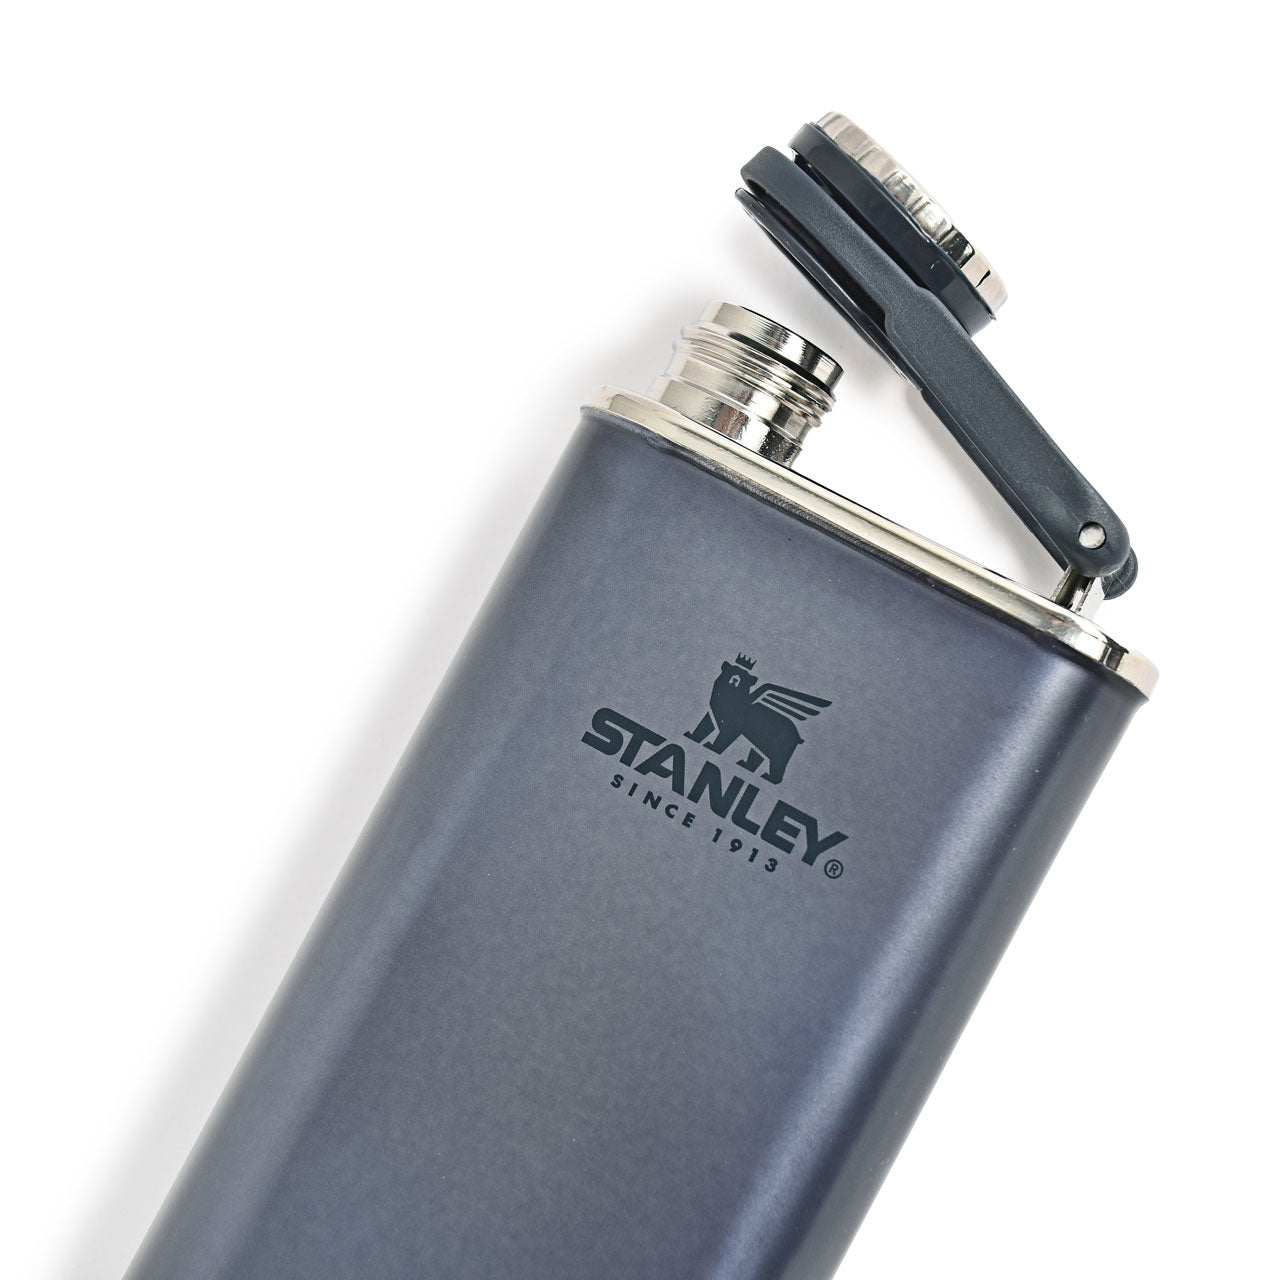 Stanley Master Series Hip Flask